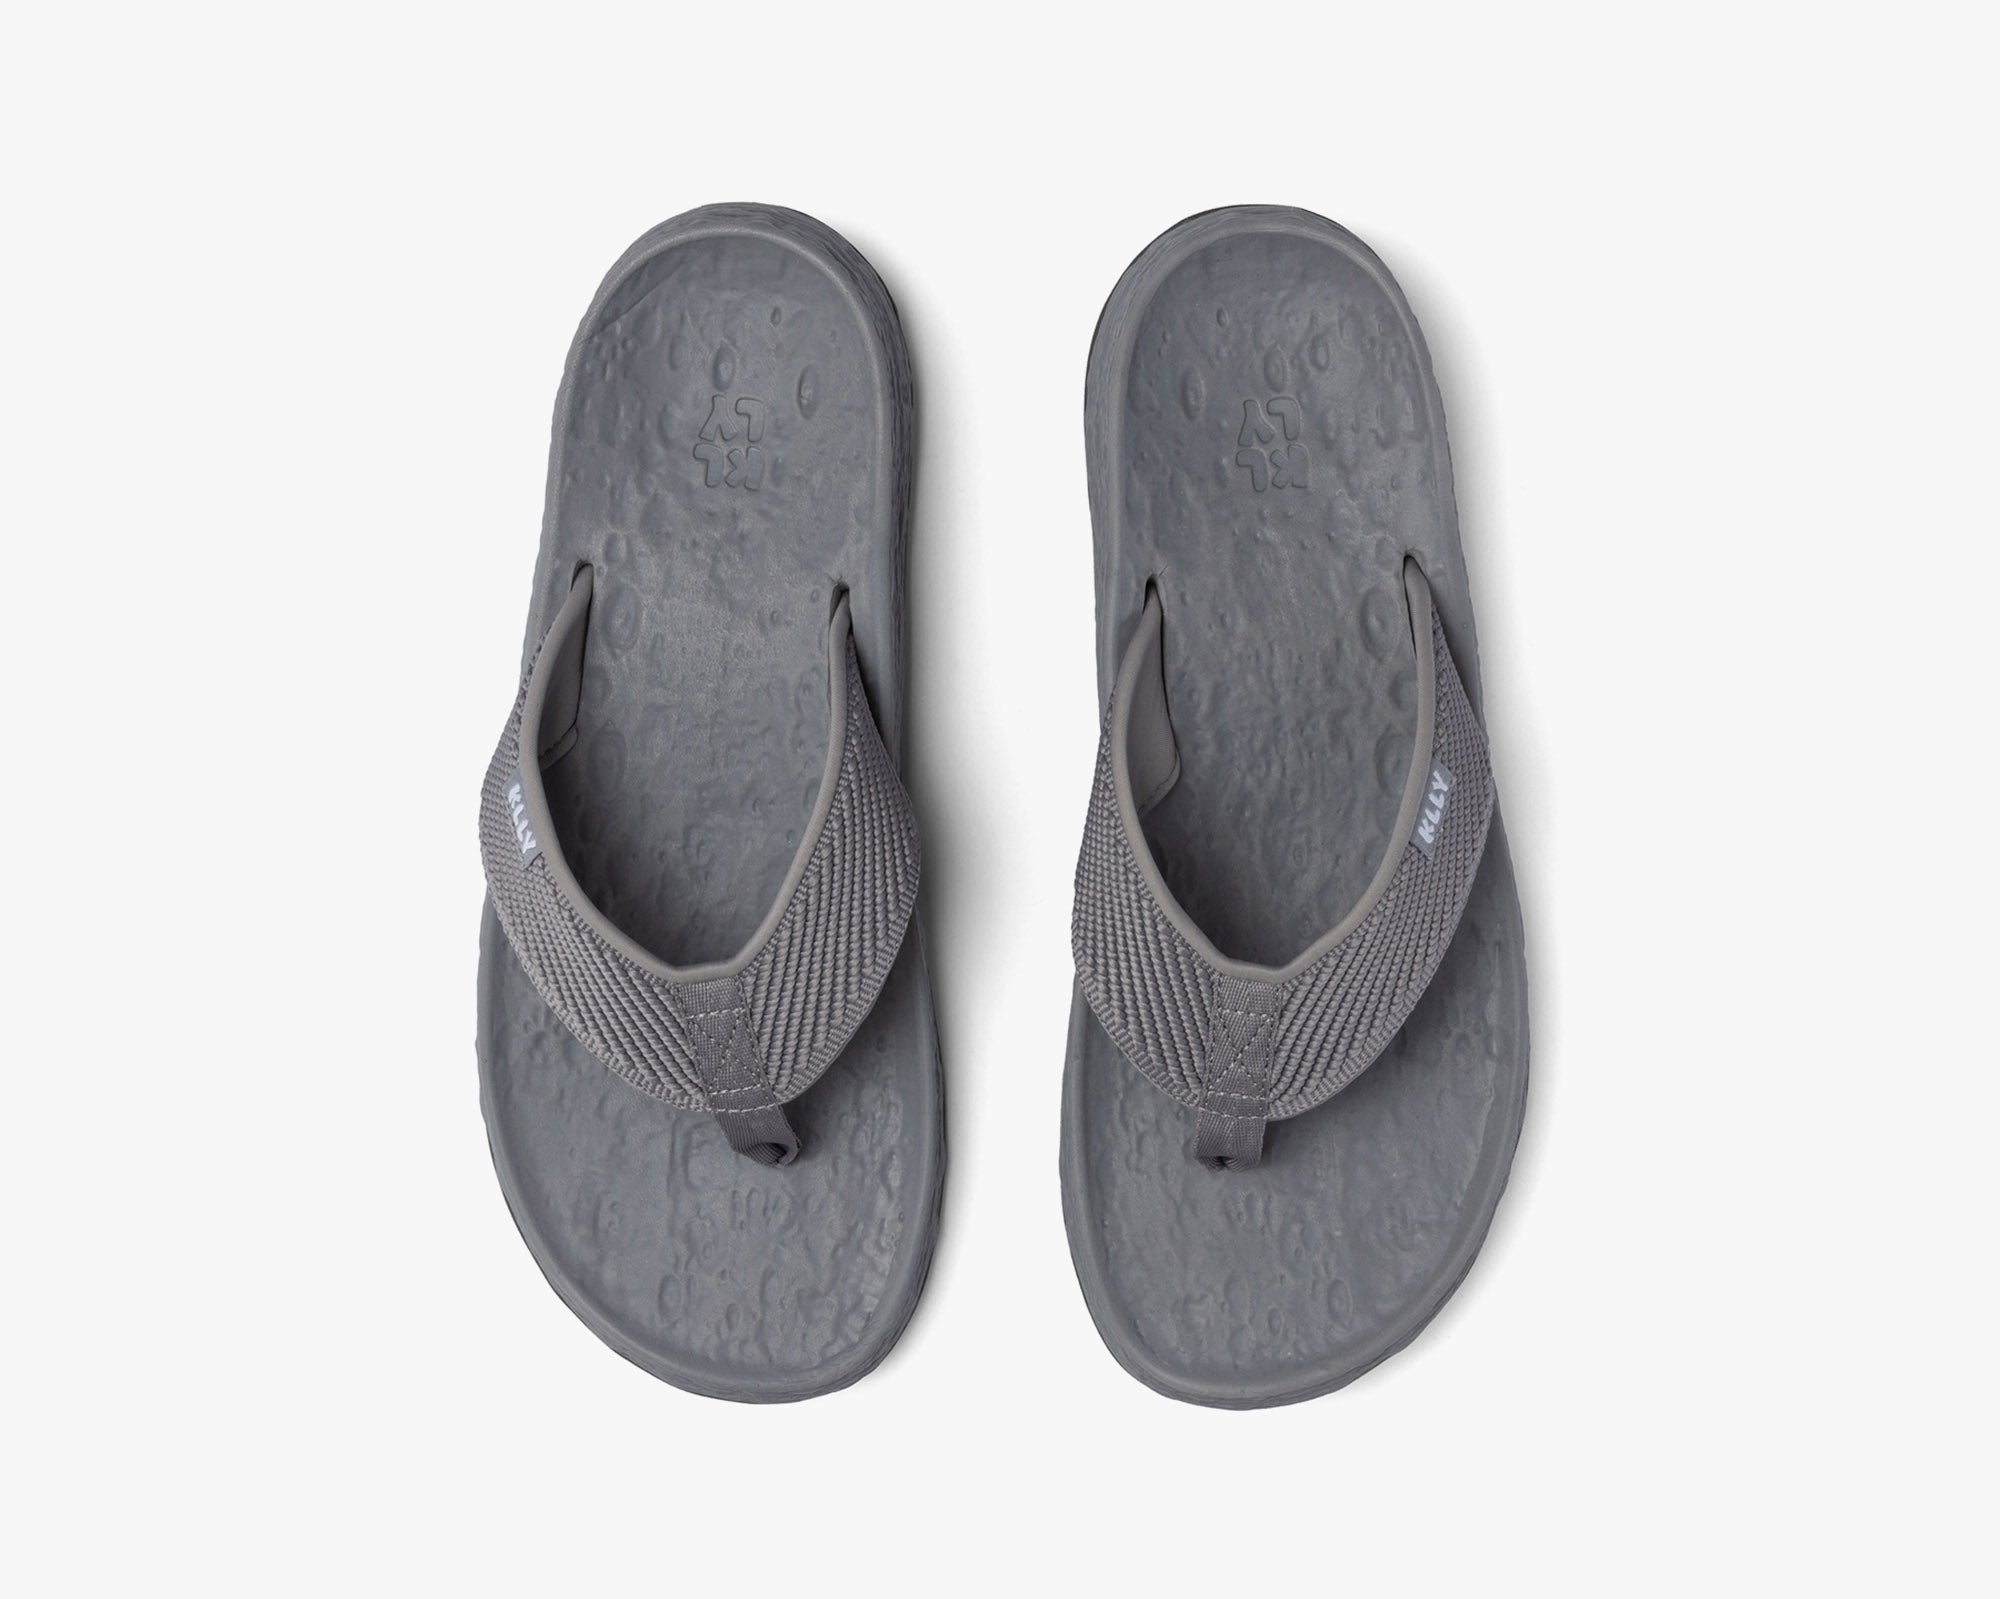 Men’s beach sandals - klly sandals wolf moon?